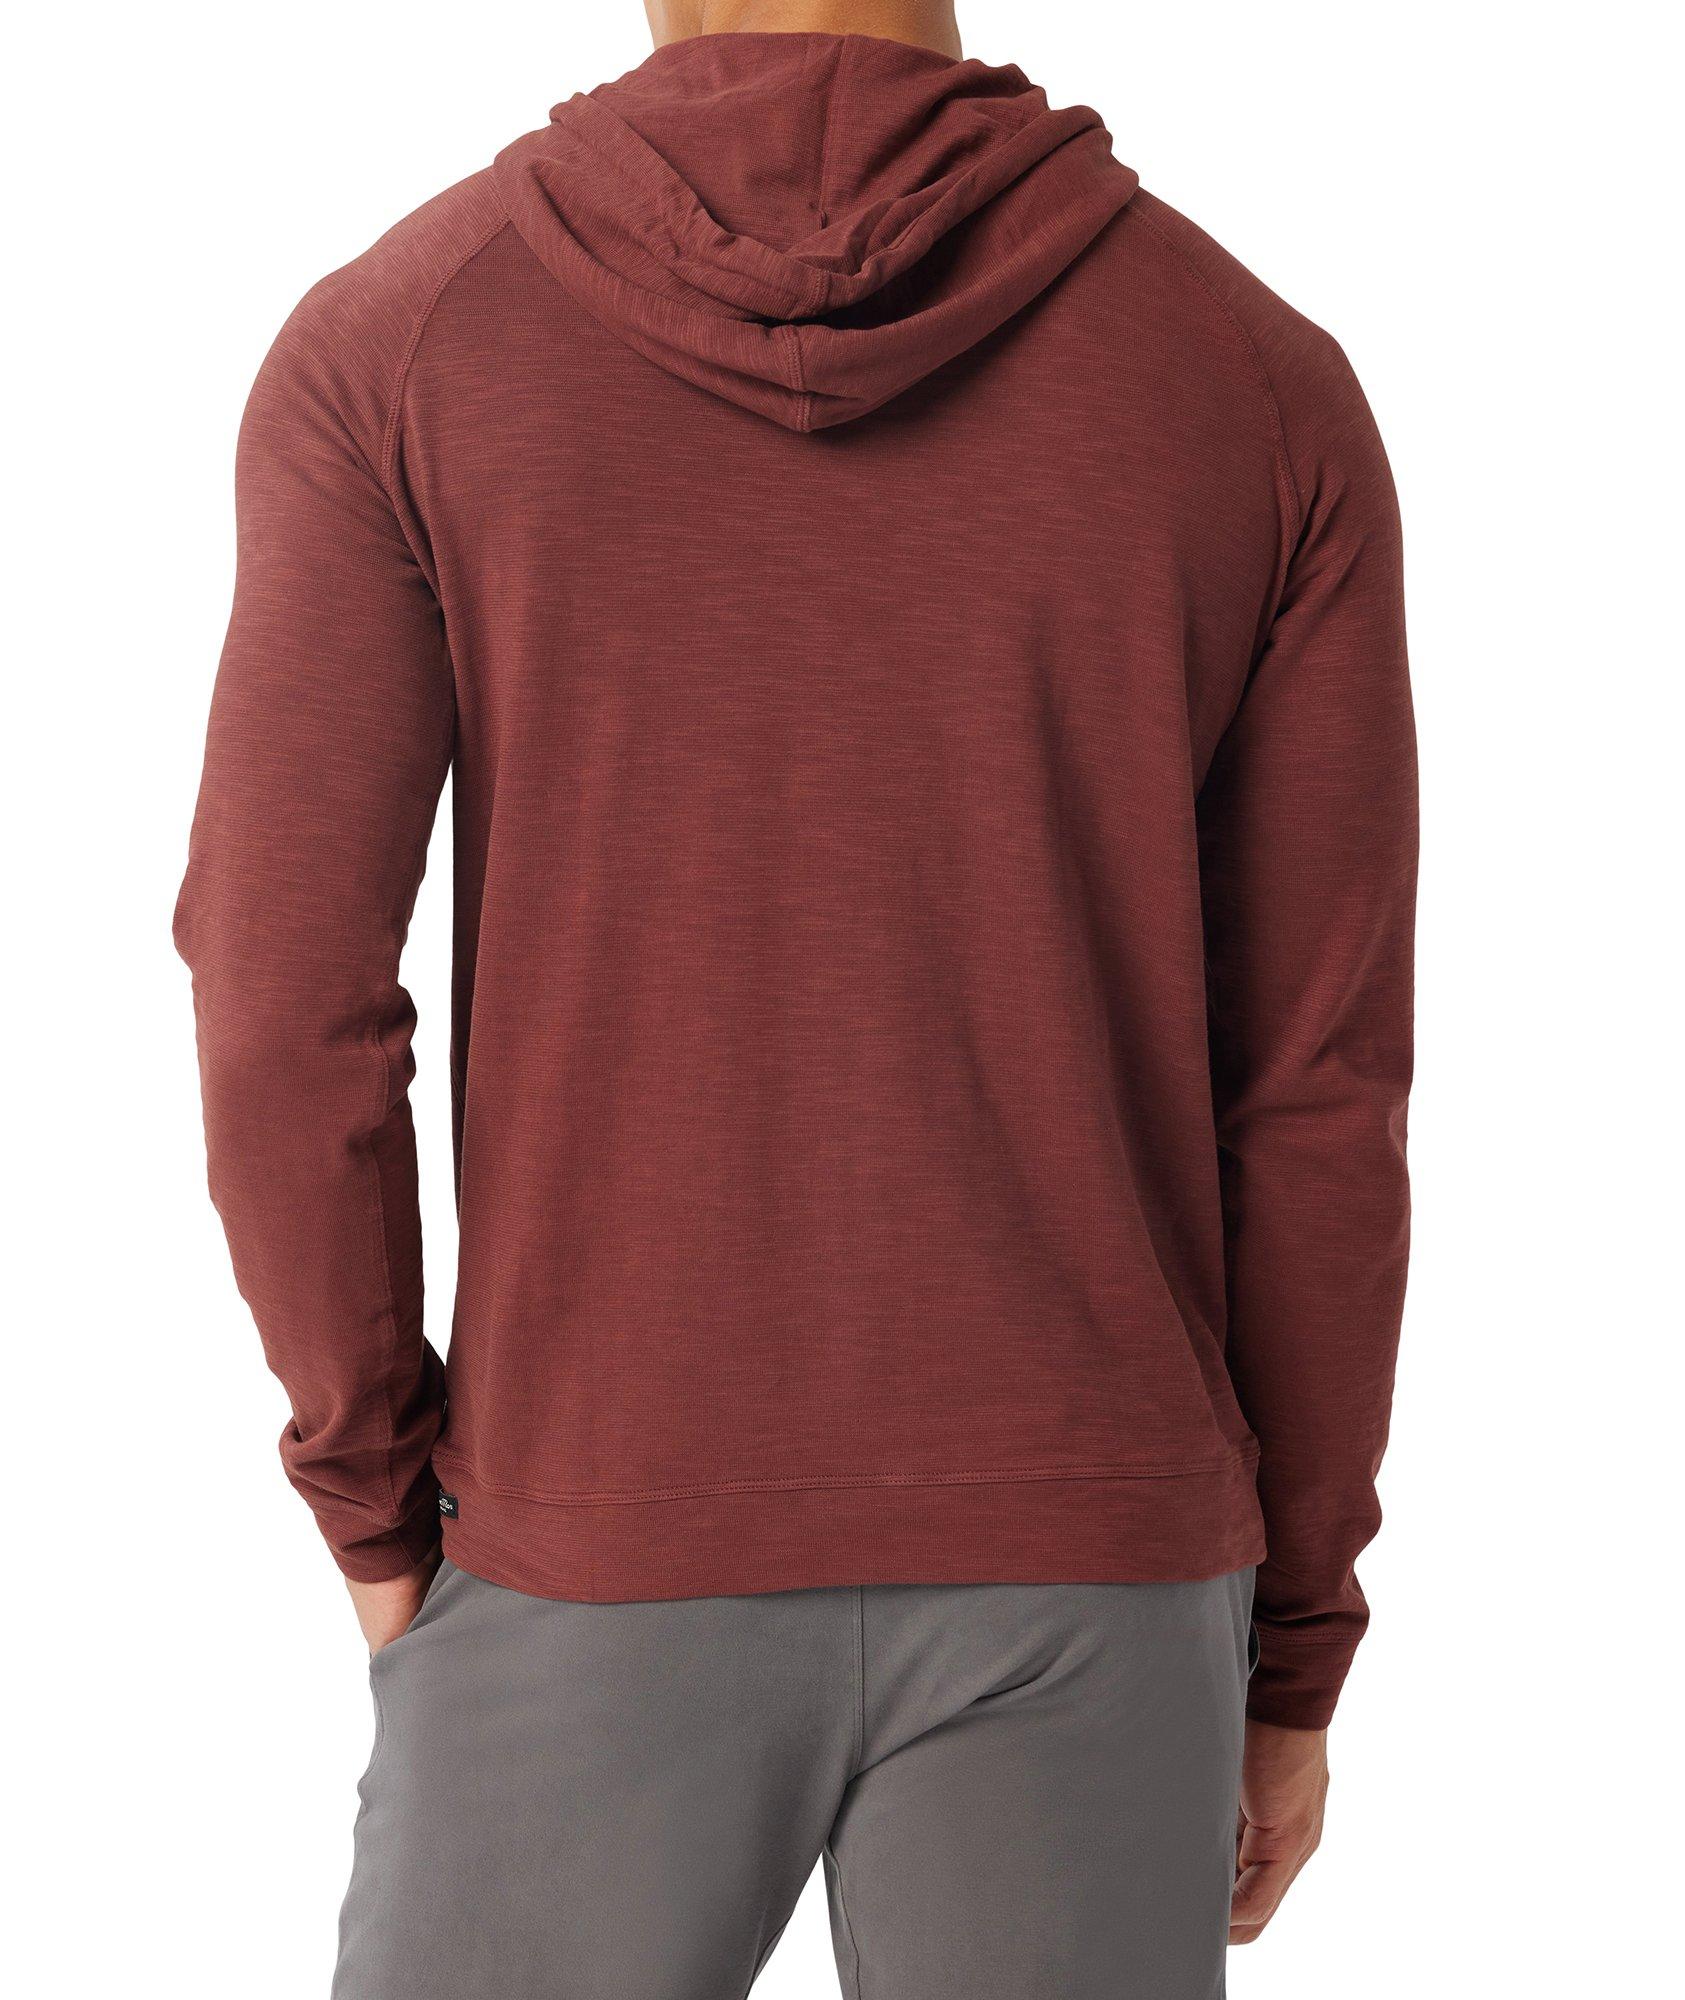 Long-Sleeve Soft Slub Hooded Sweater image 3